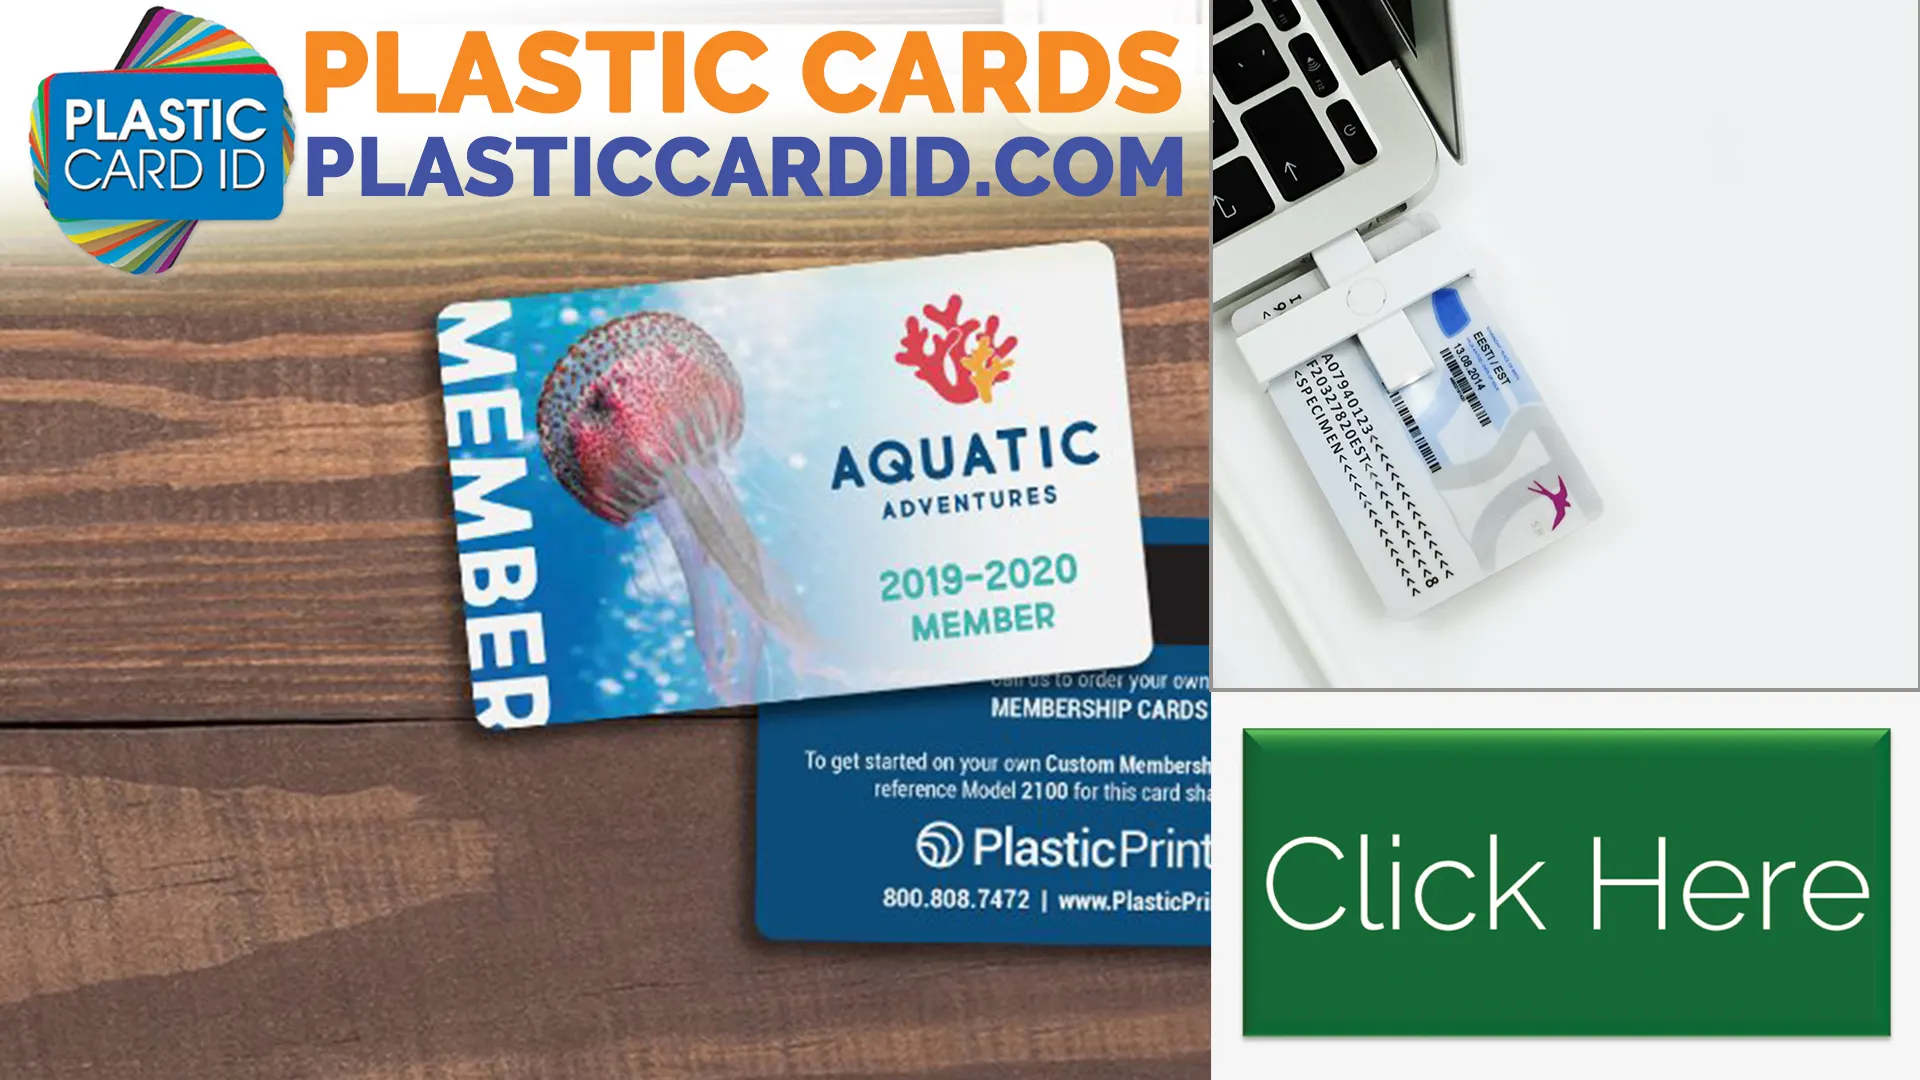 Maximizing Value Through Custom Plastic Card Options